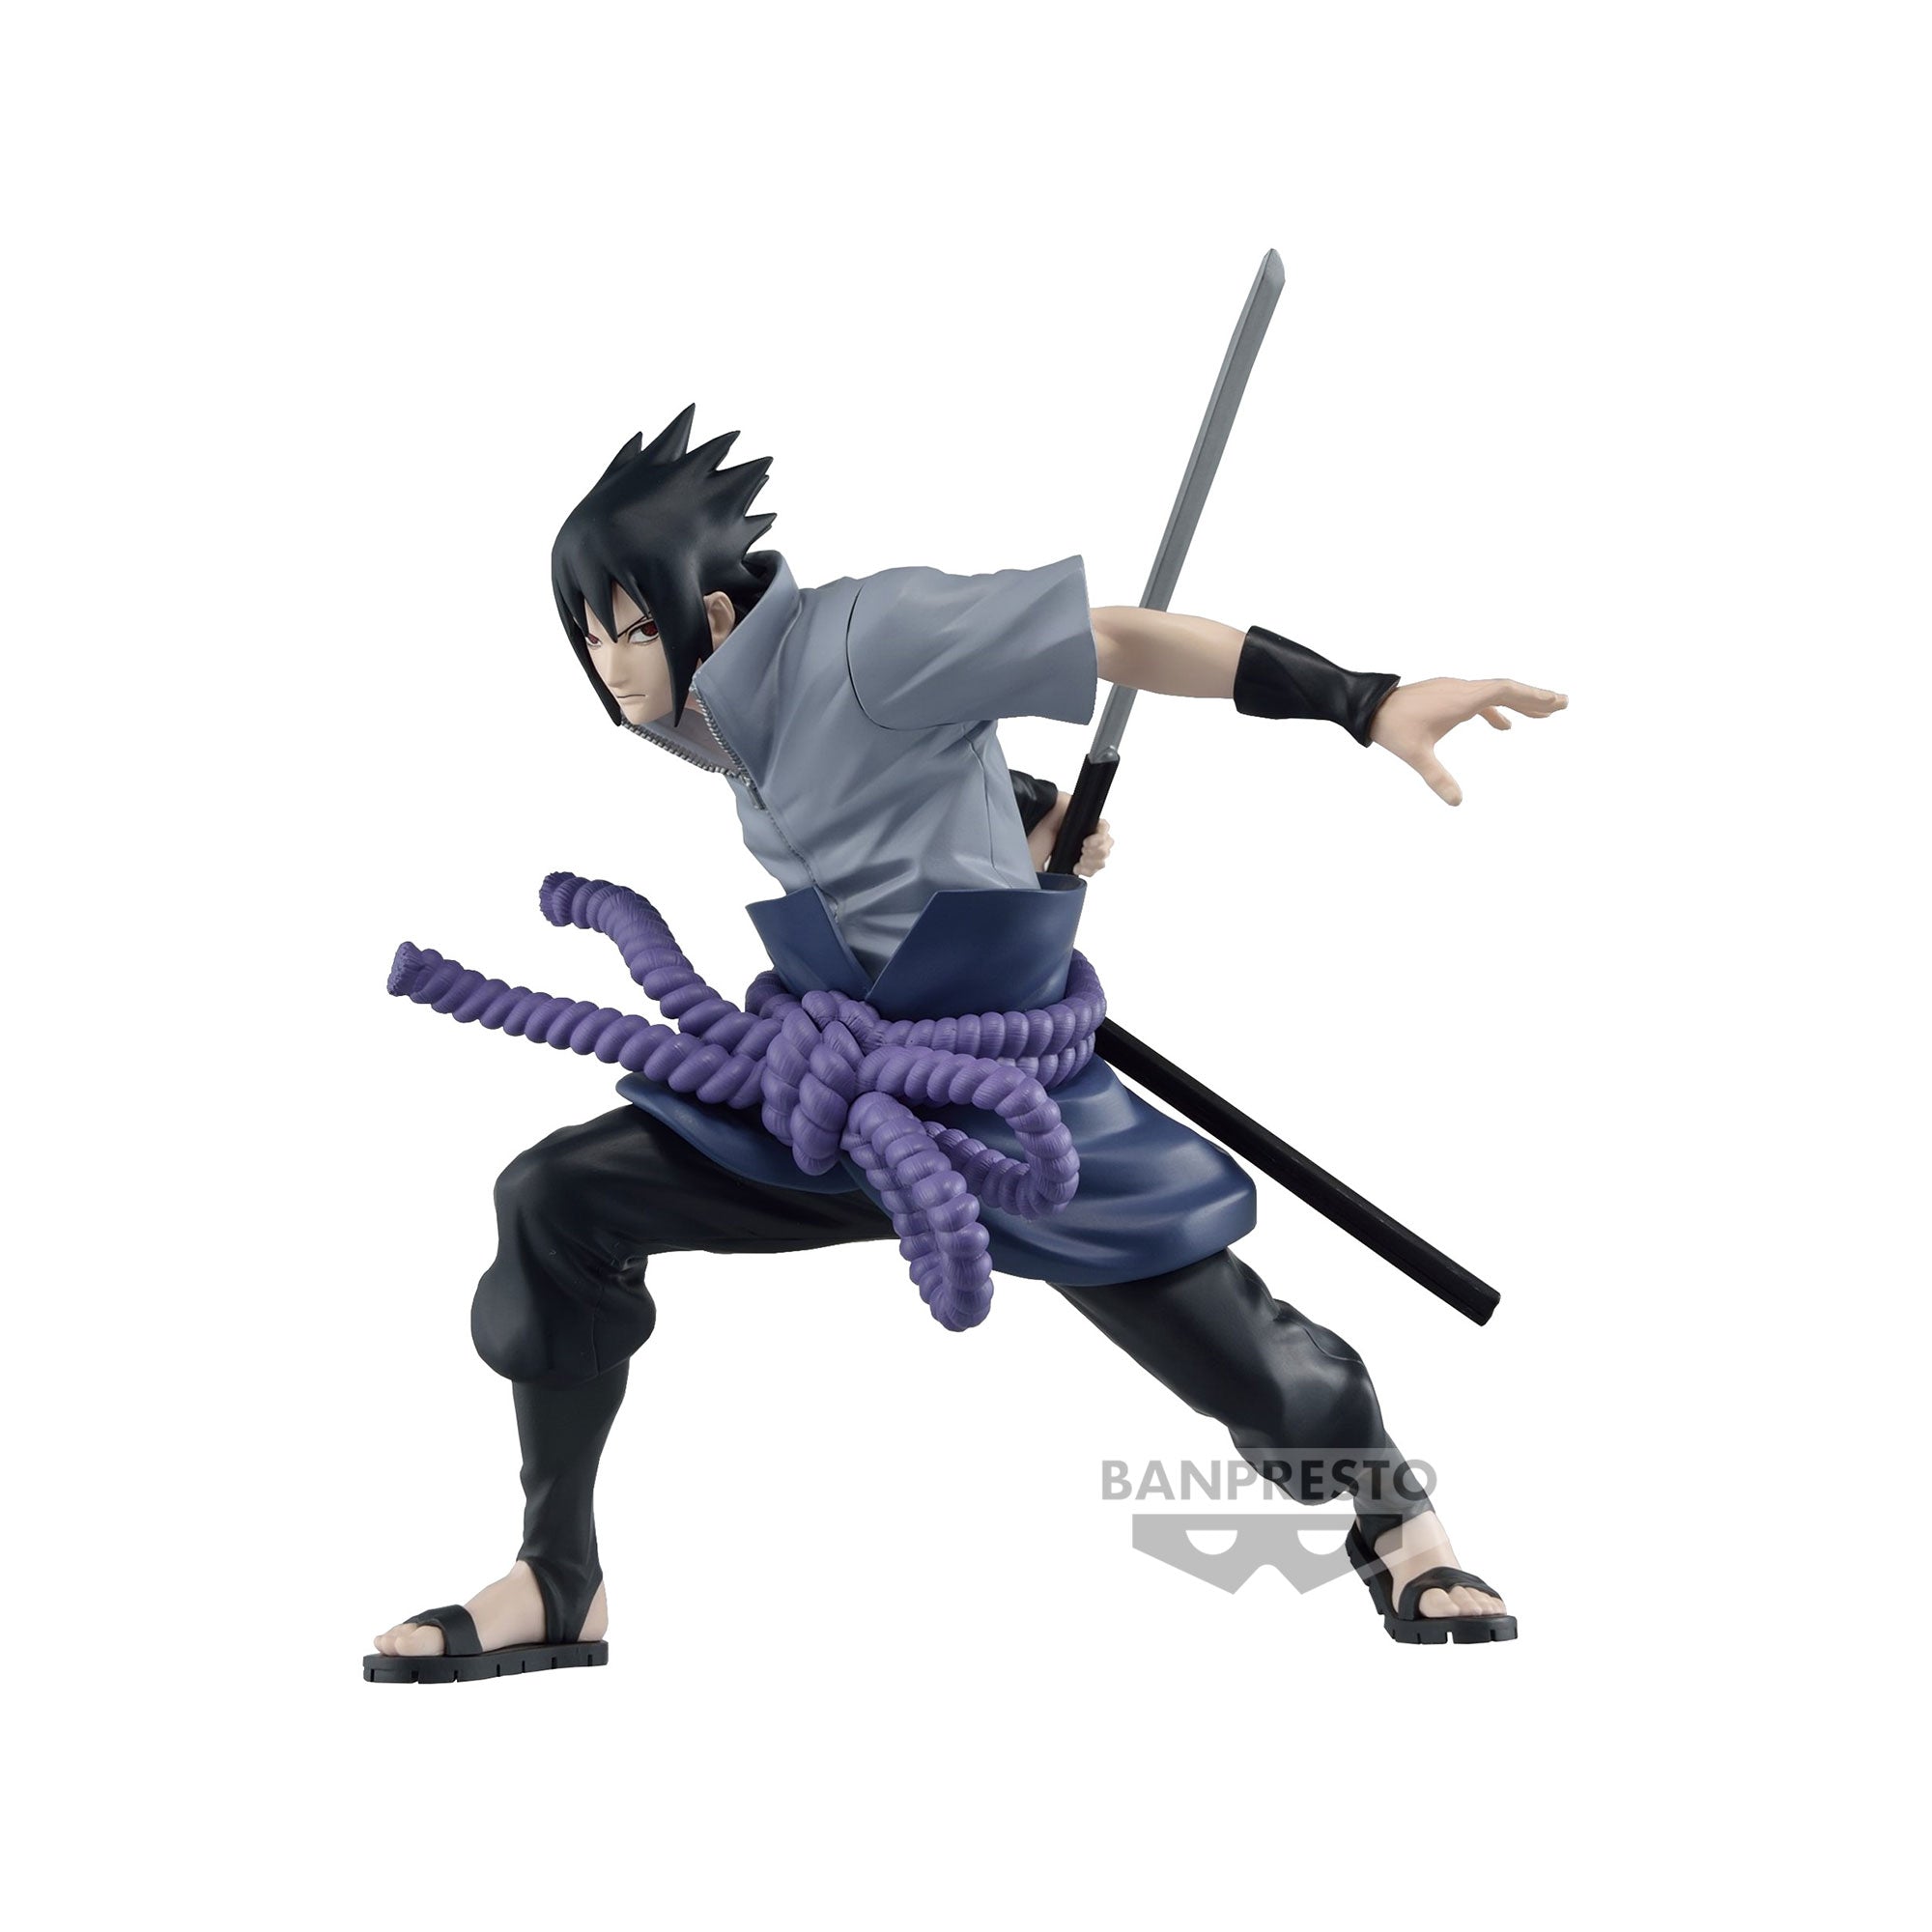 Sasuke Uchiha Toys, Action Figures & Collectibles - Entertainment